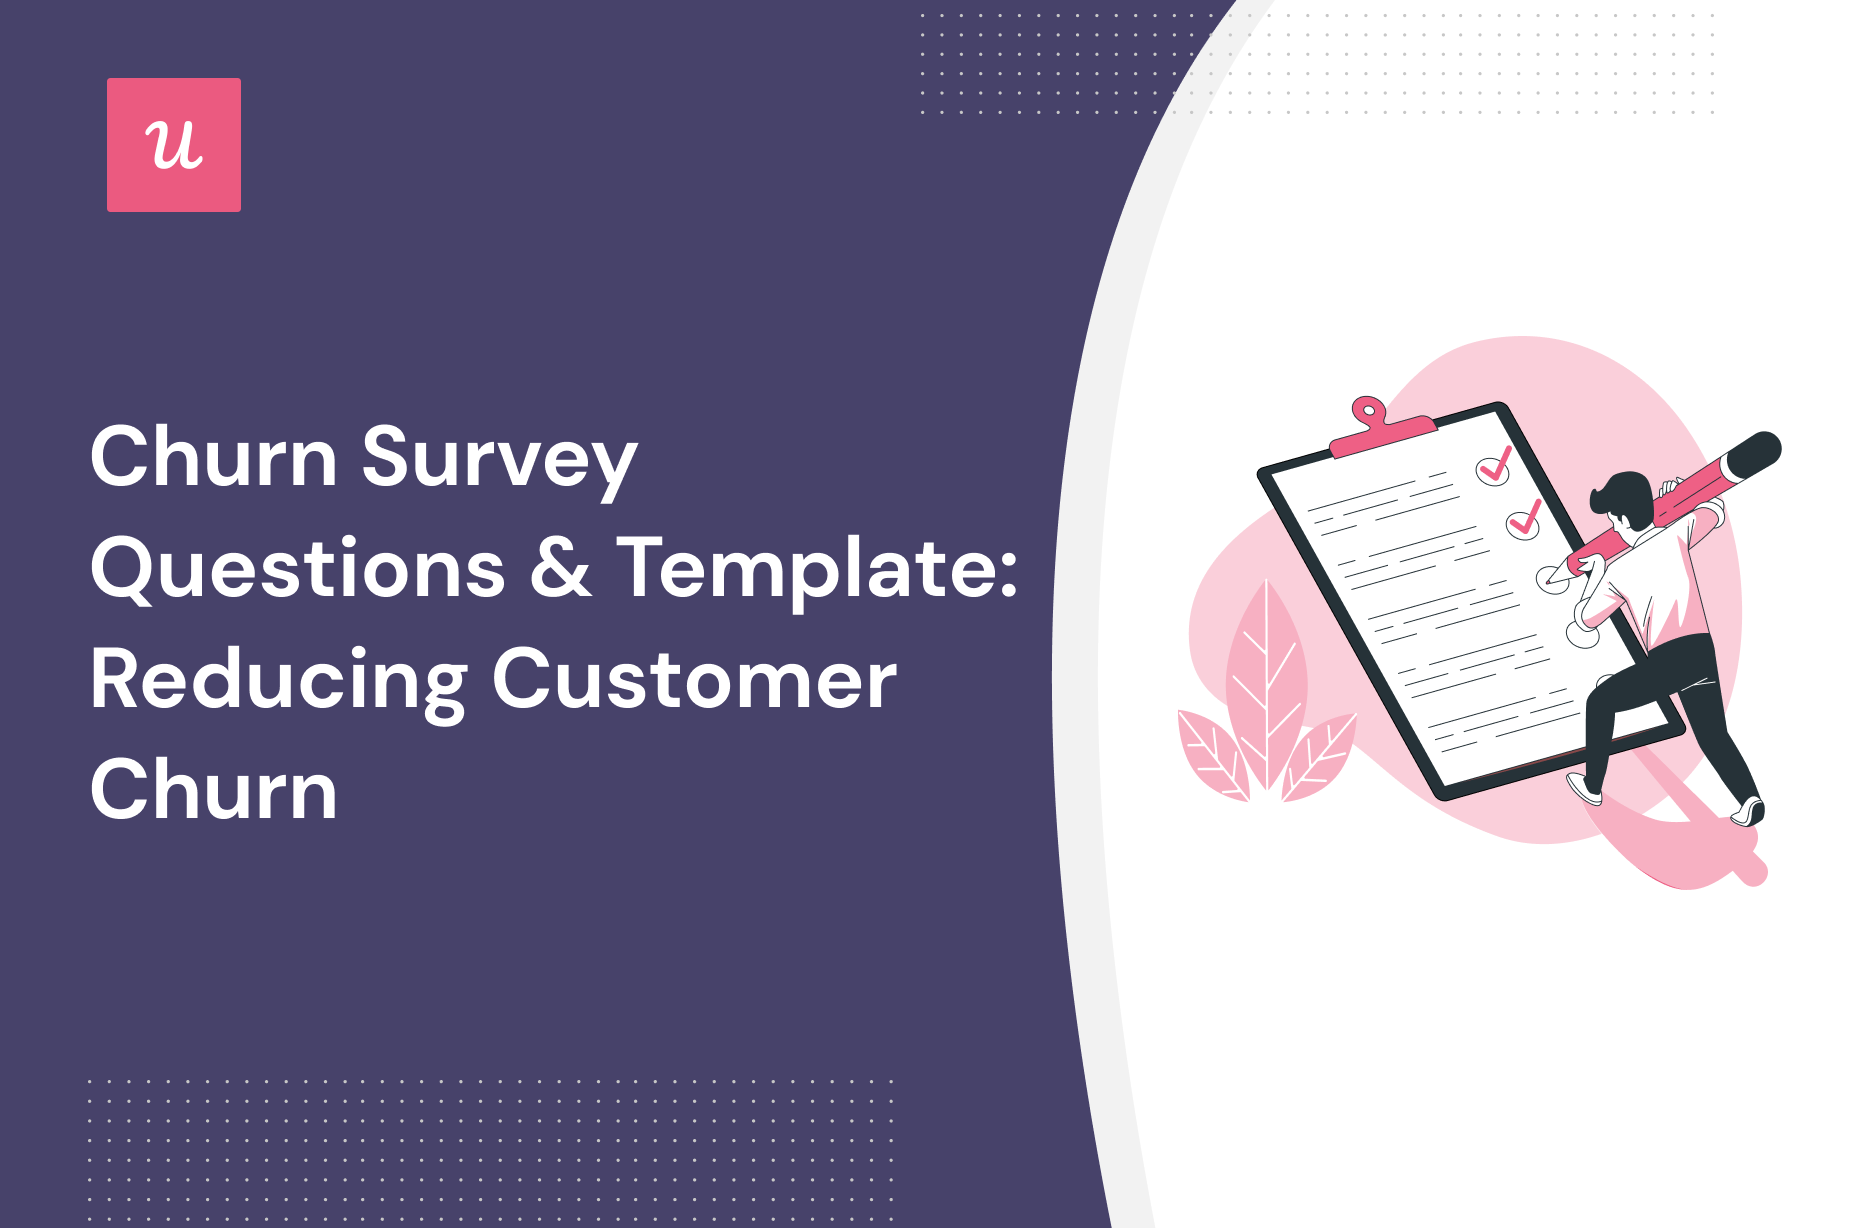 Churn Survey Questions & Template: Reducing Customer Churn